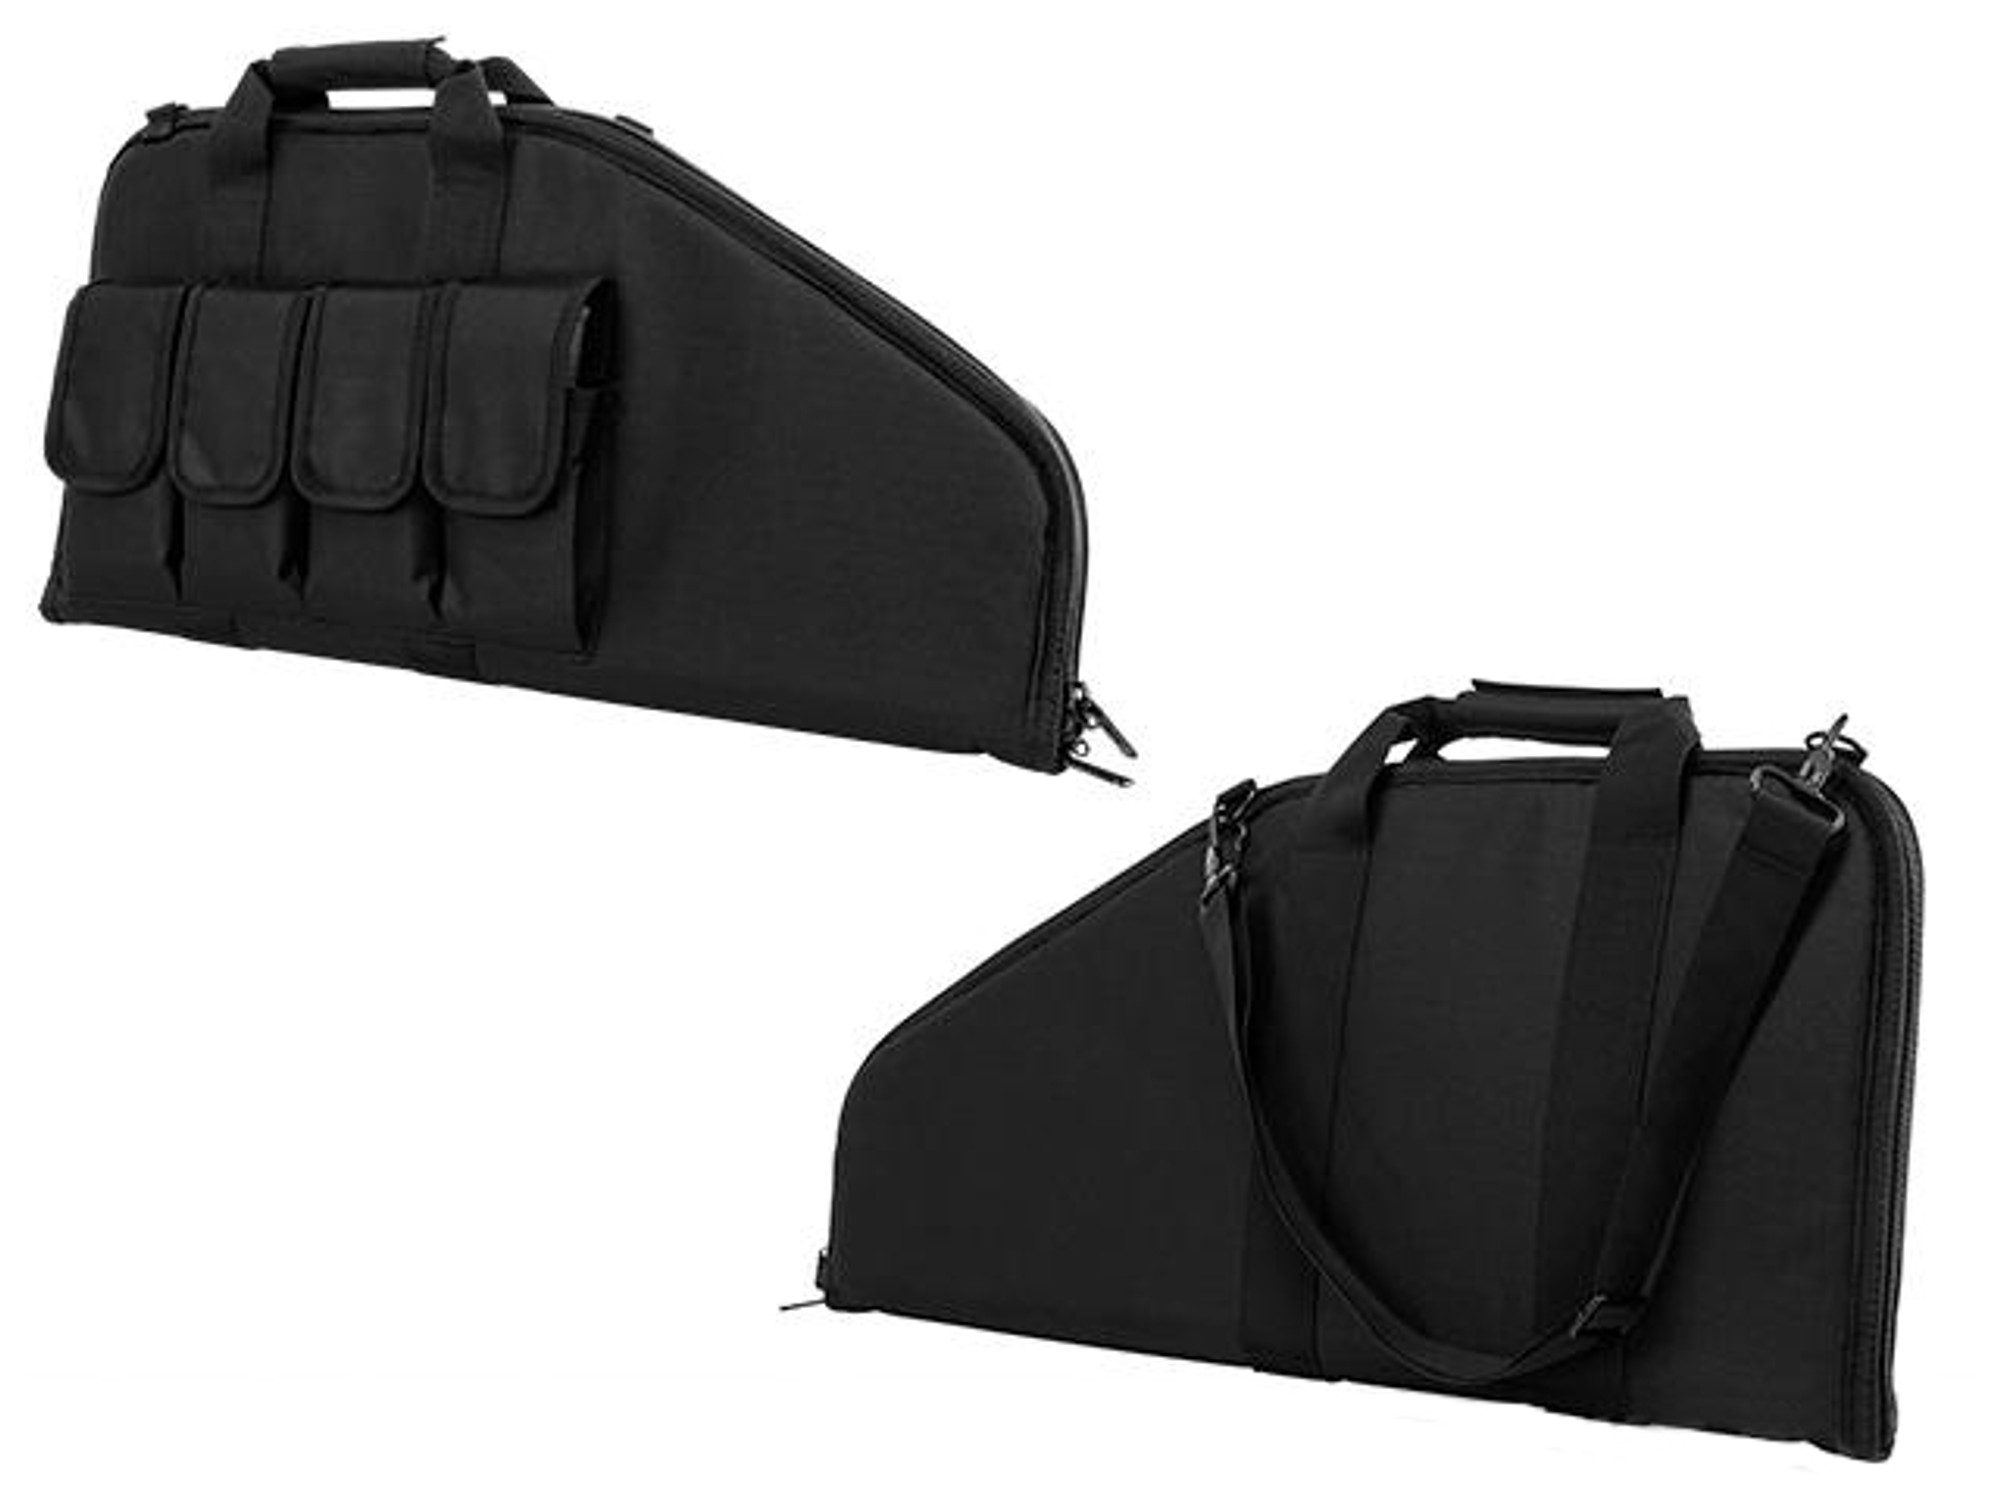 VISM 28" Sub Machinegun / Pistol Carbine Length Nylon Gun Bag - Black